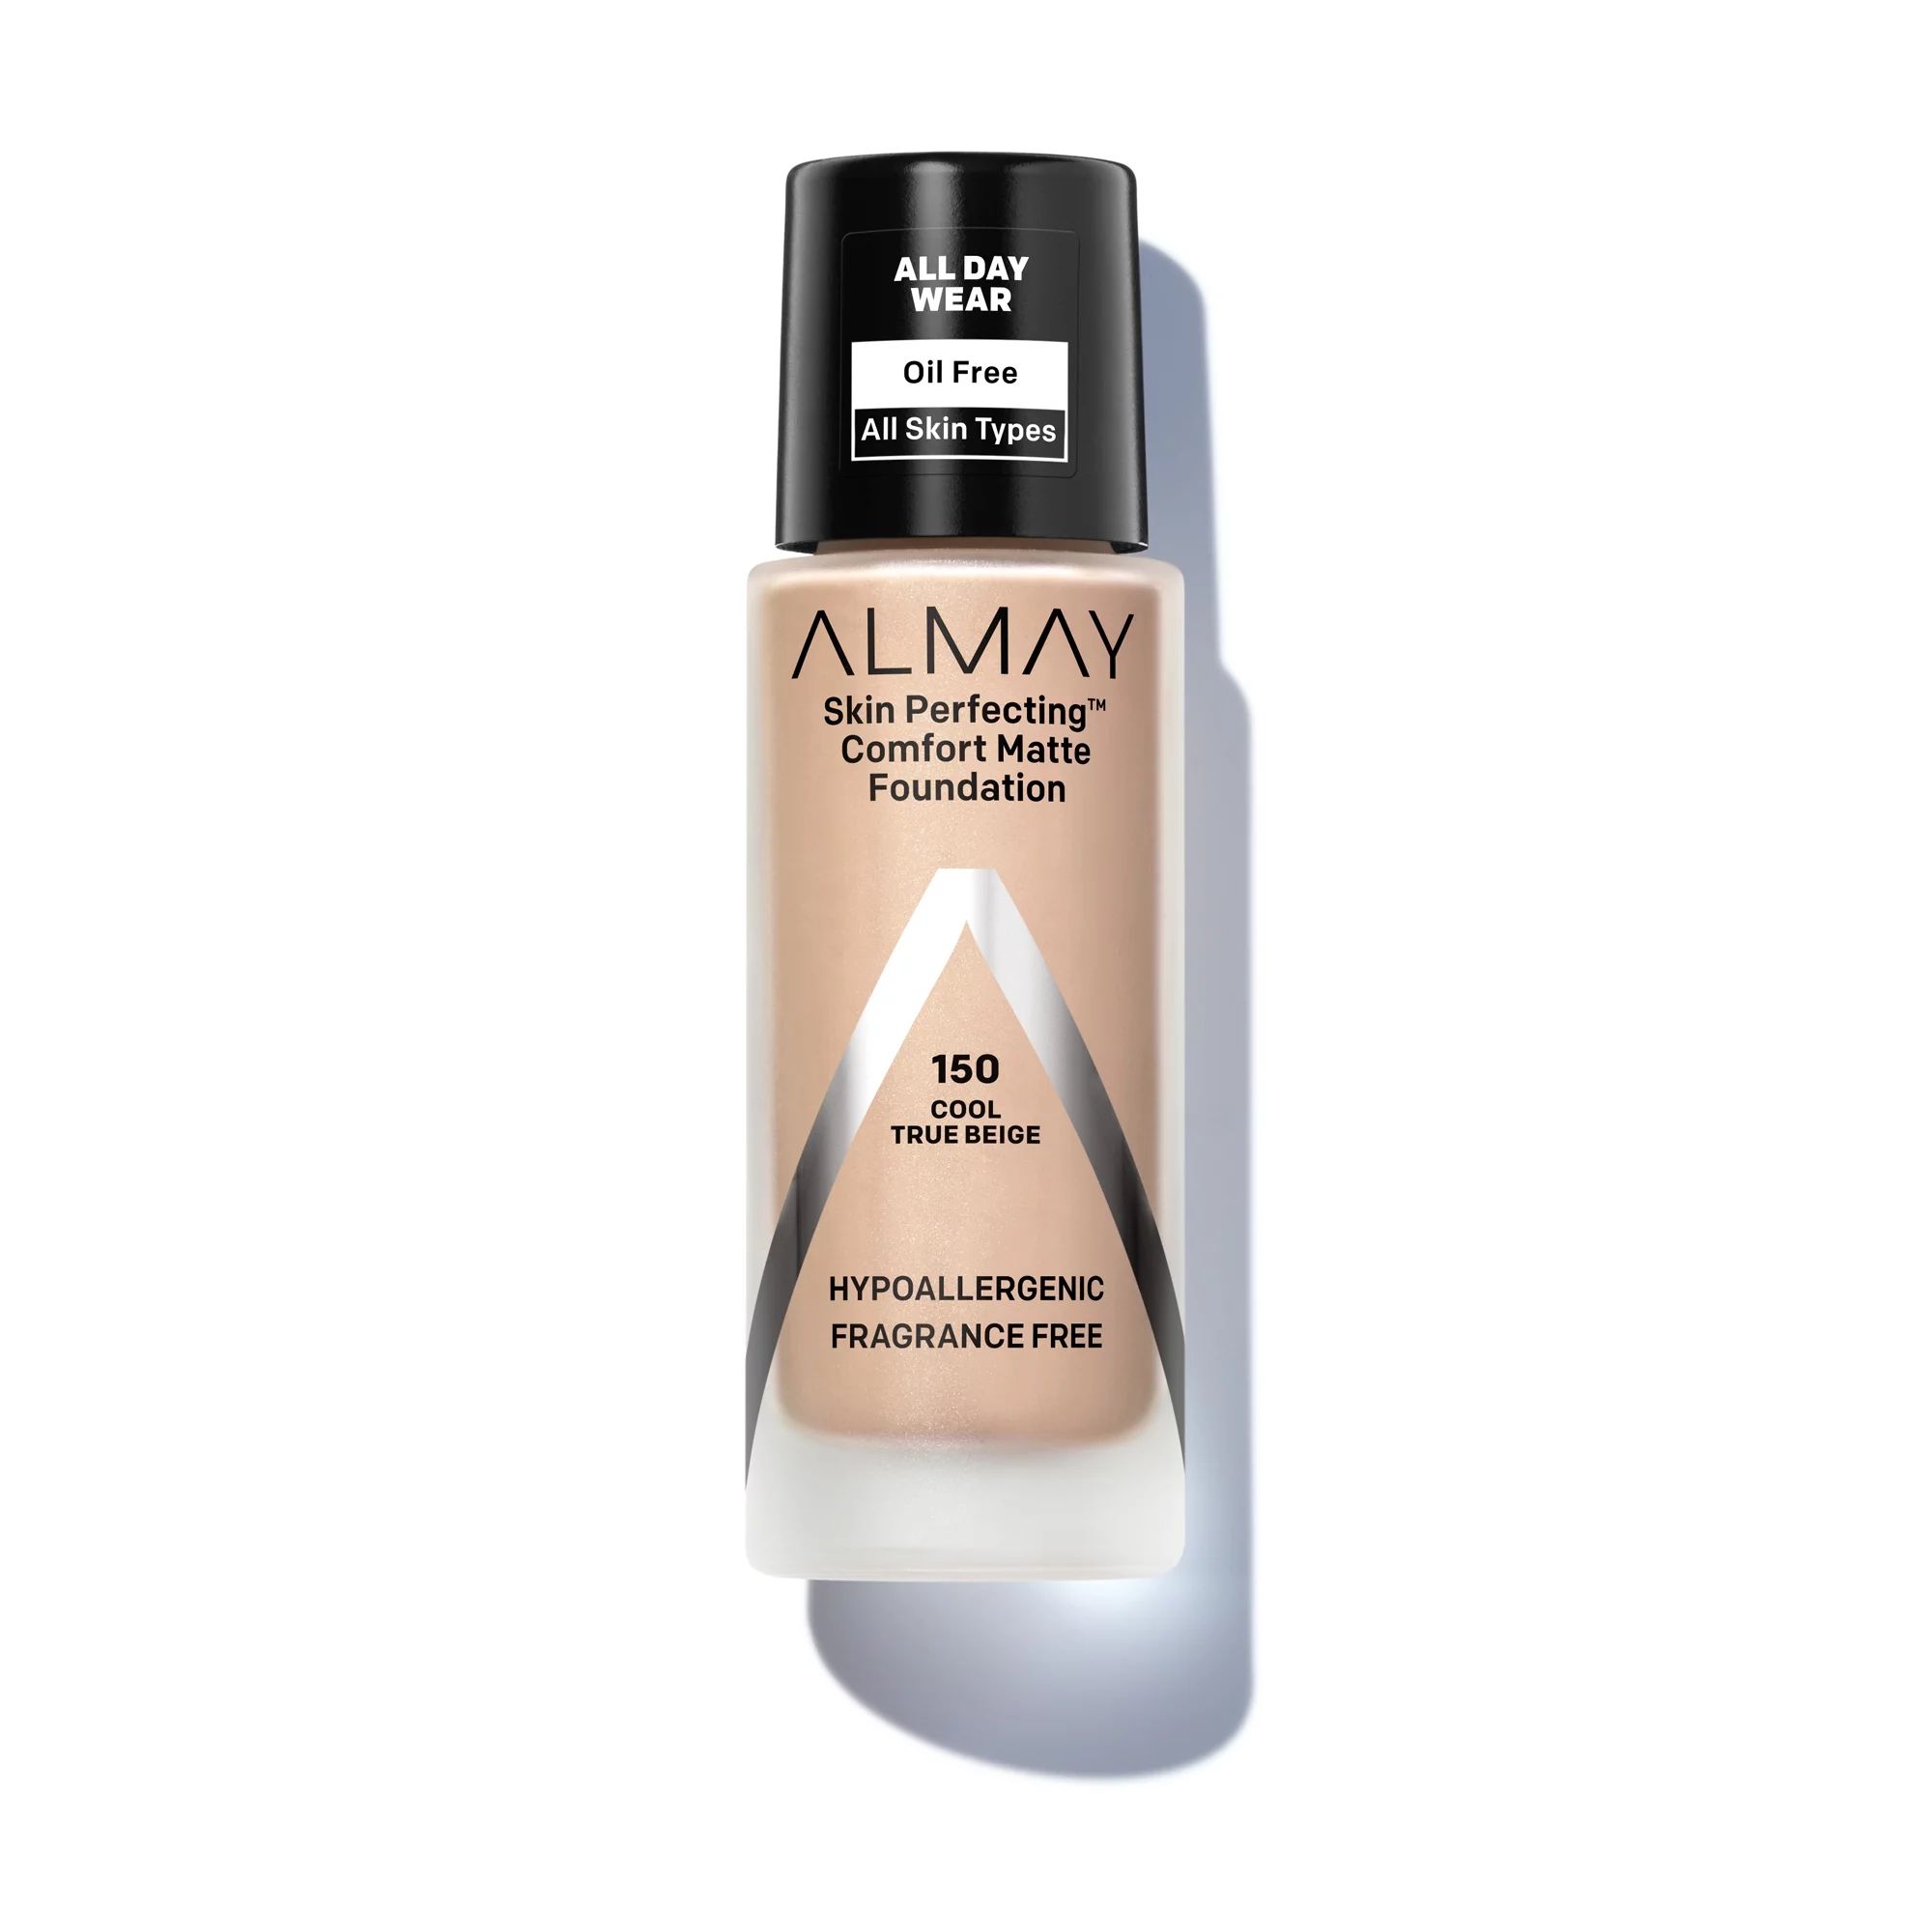 Almay Skin Perfecting Comfort Matte Foundation, Oil Free, All skin Types, 150 Cool True Beige, 1.... | Walmart (US)